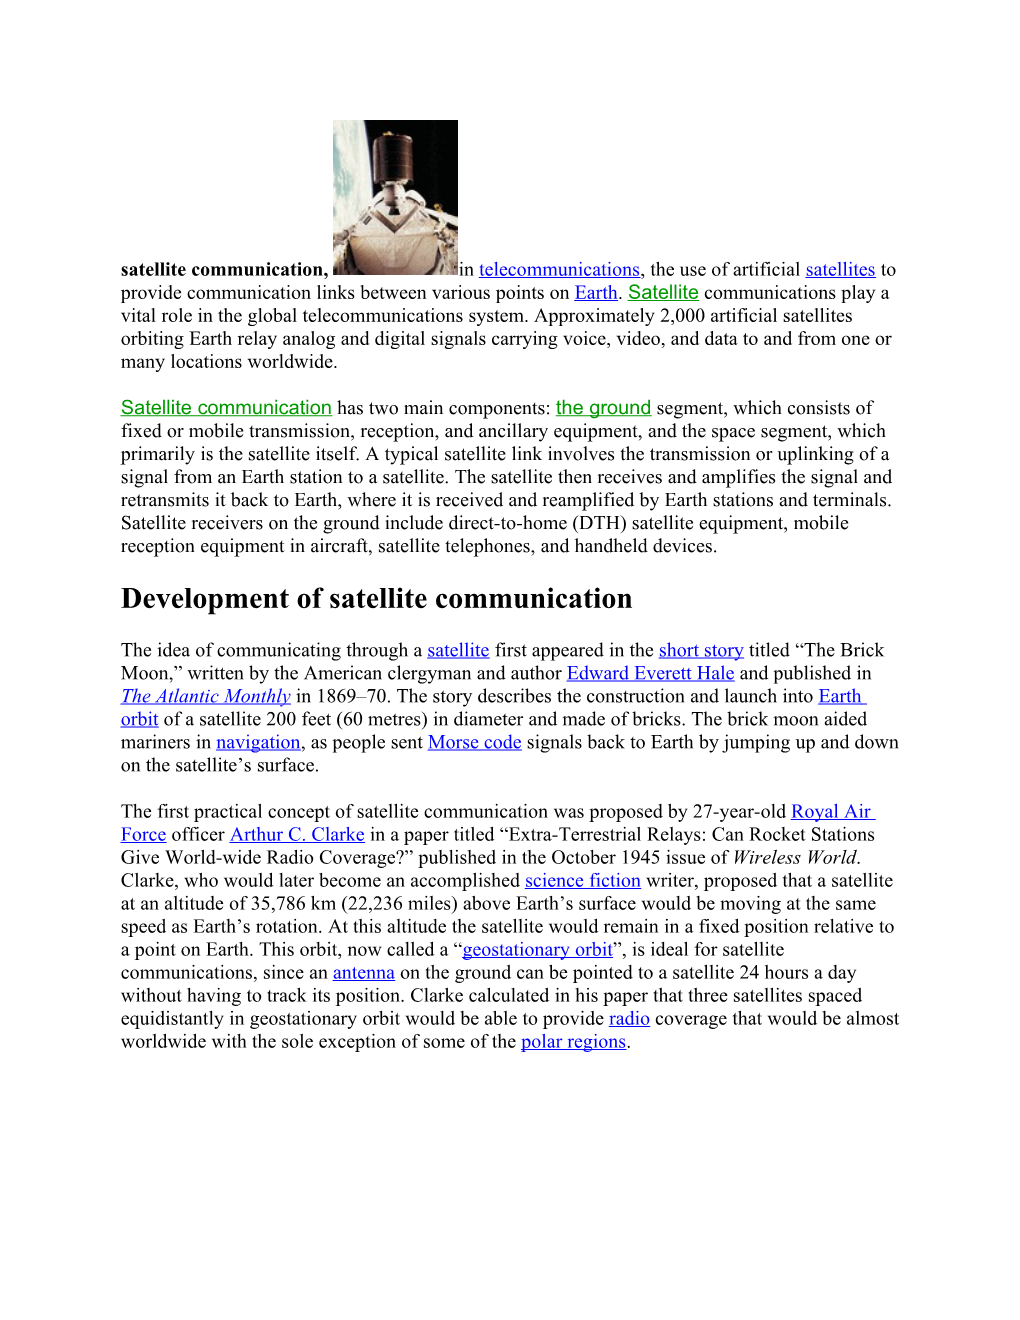 Development of Satellite Communication